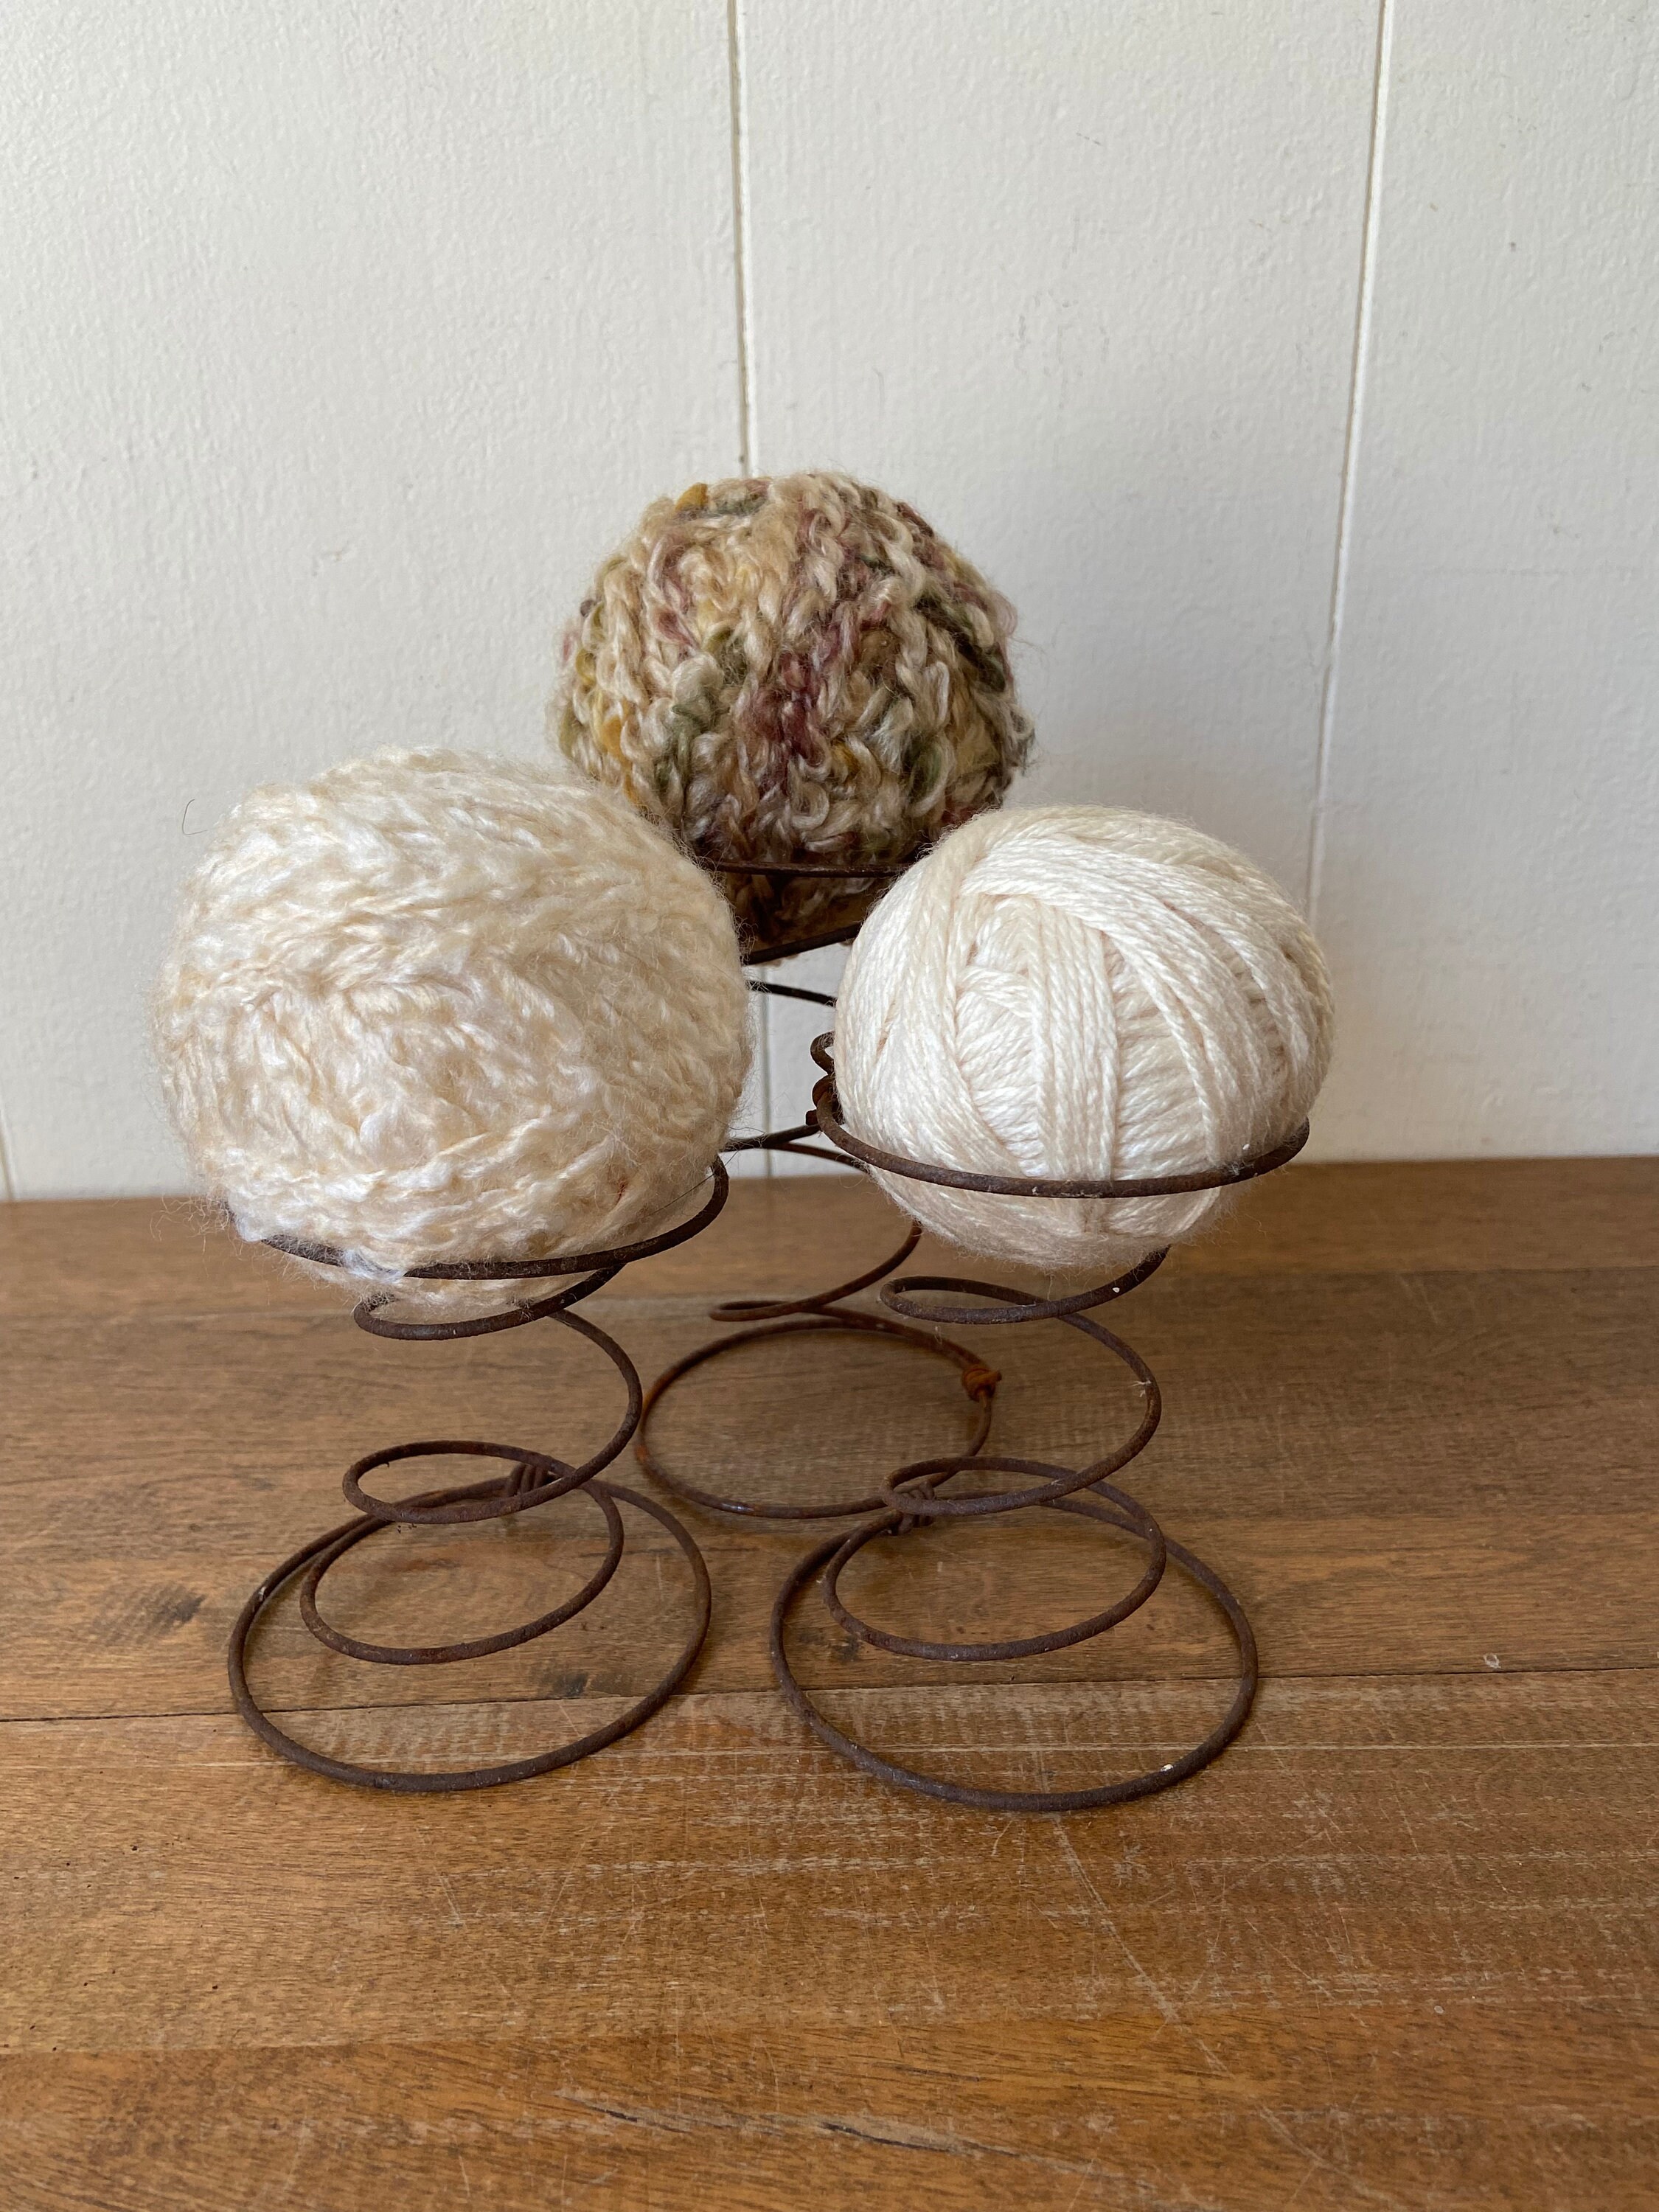 50 Pcs Handmade Pom Poms Balls With Wire Hook Woolen Pom 